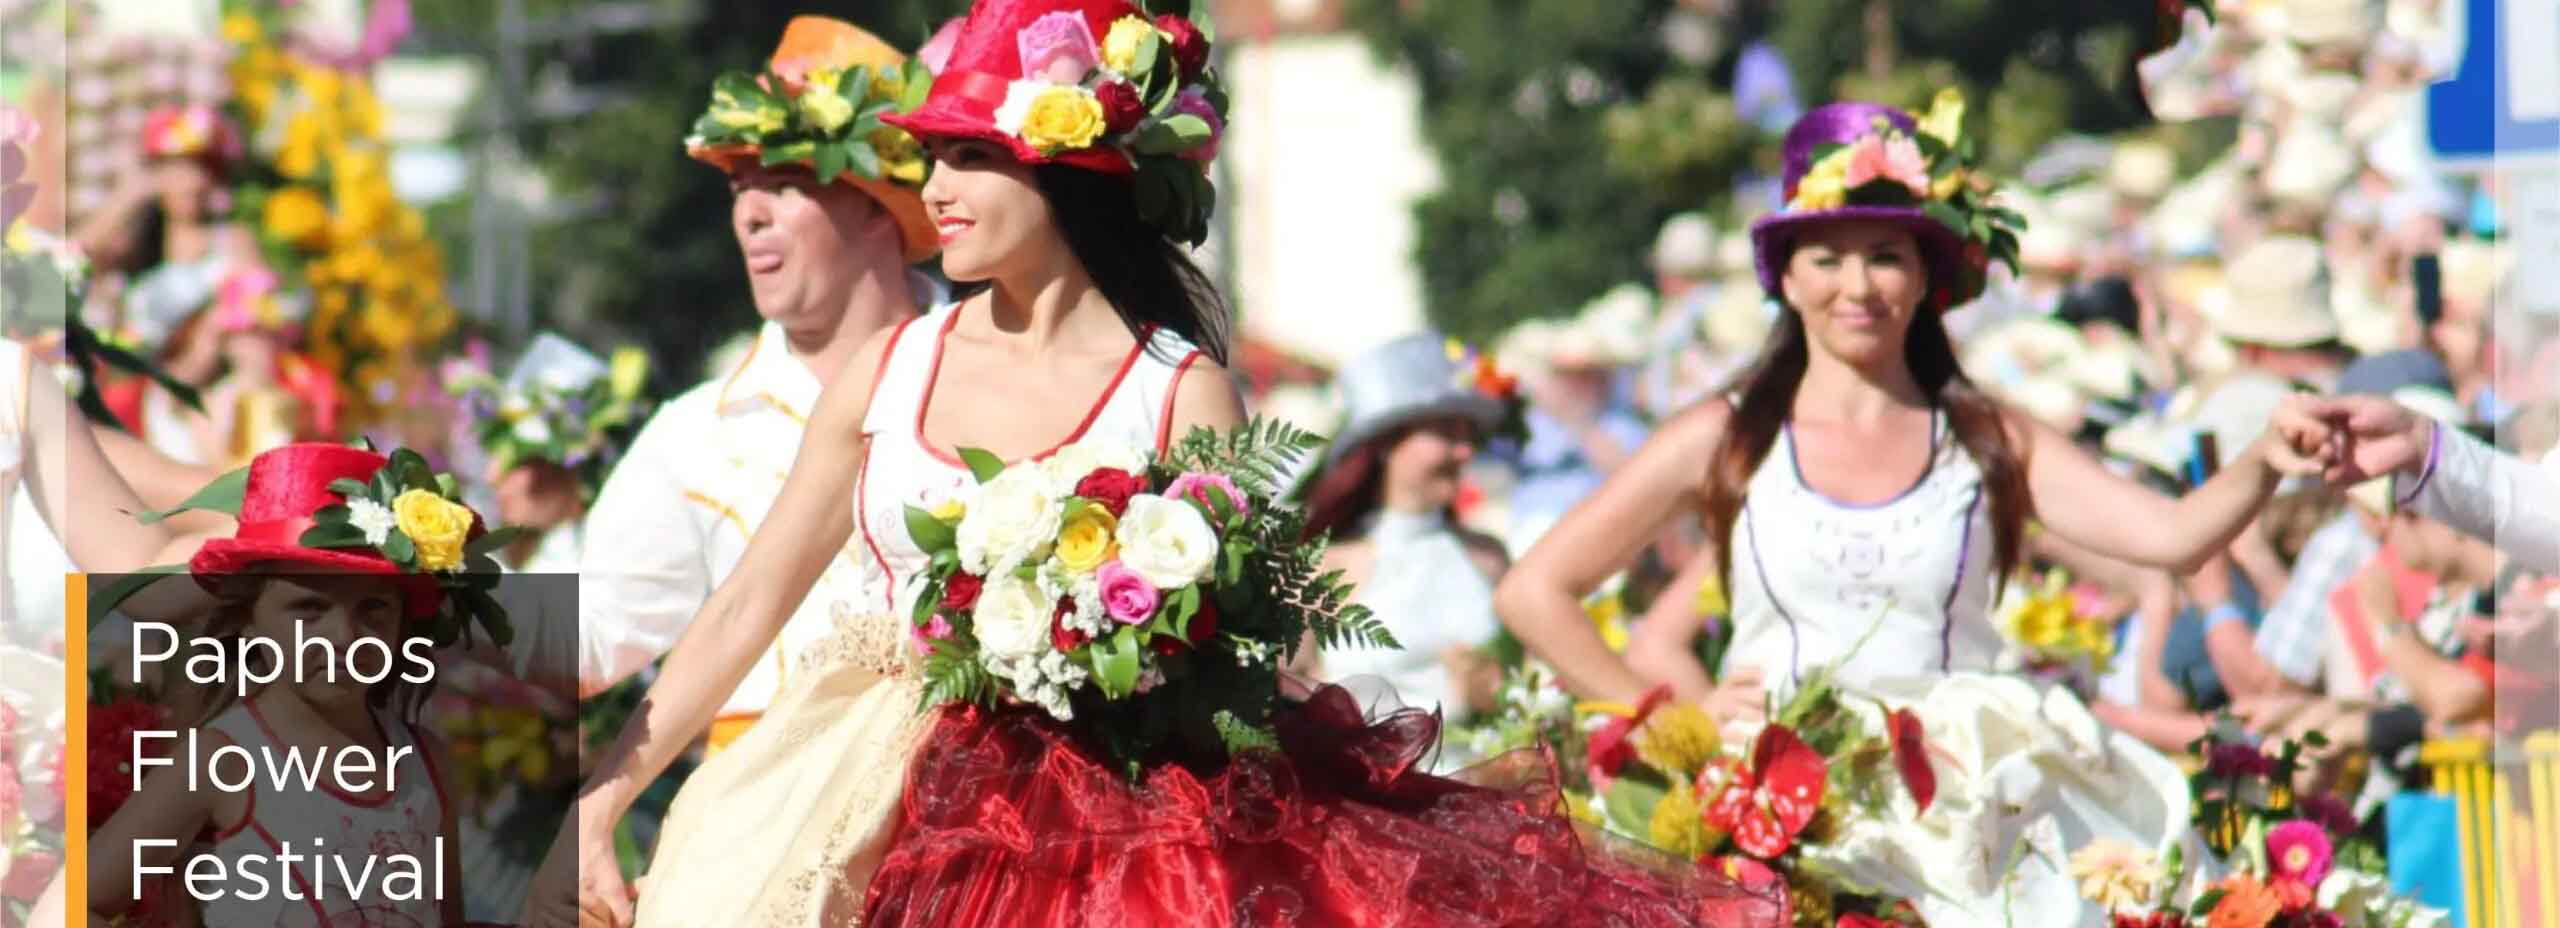 The Paphos Flower Festival